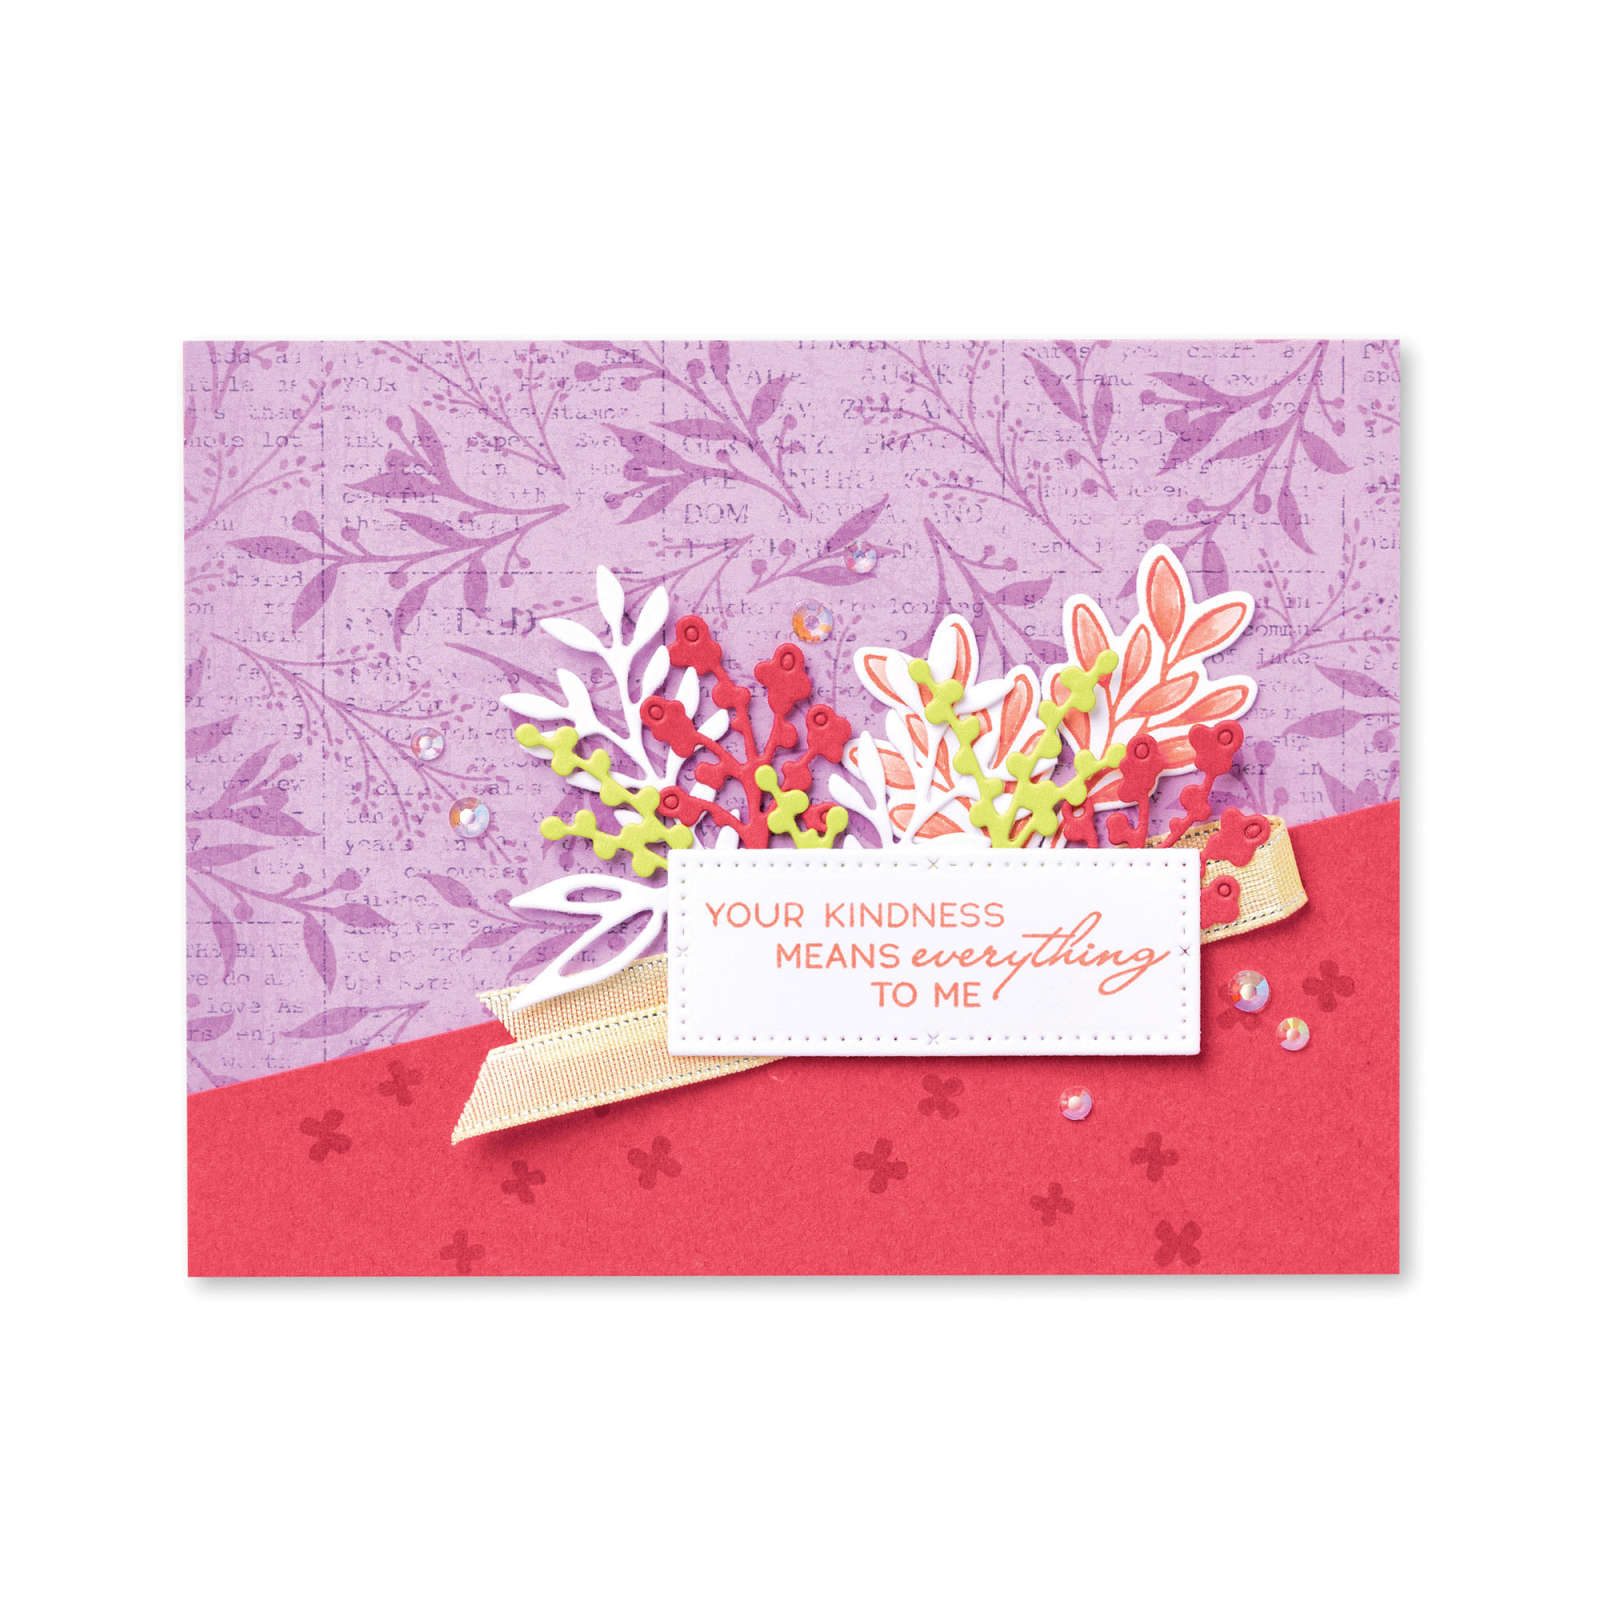 Stampersdelight: Timeless Greetings Card Kit & Scrapbook Sunday 101